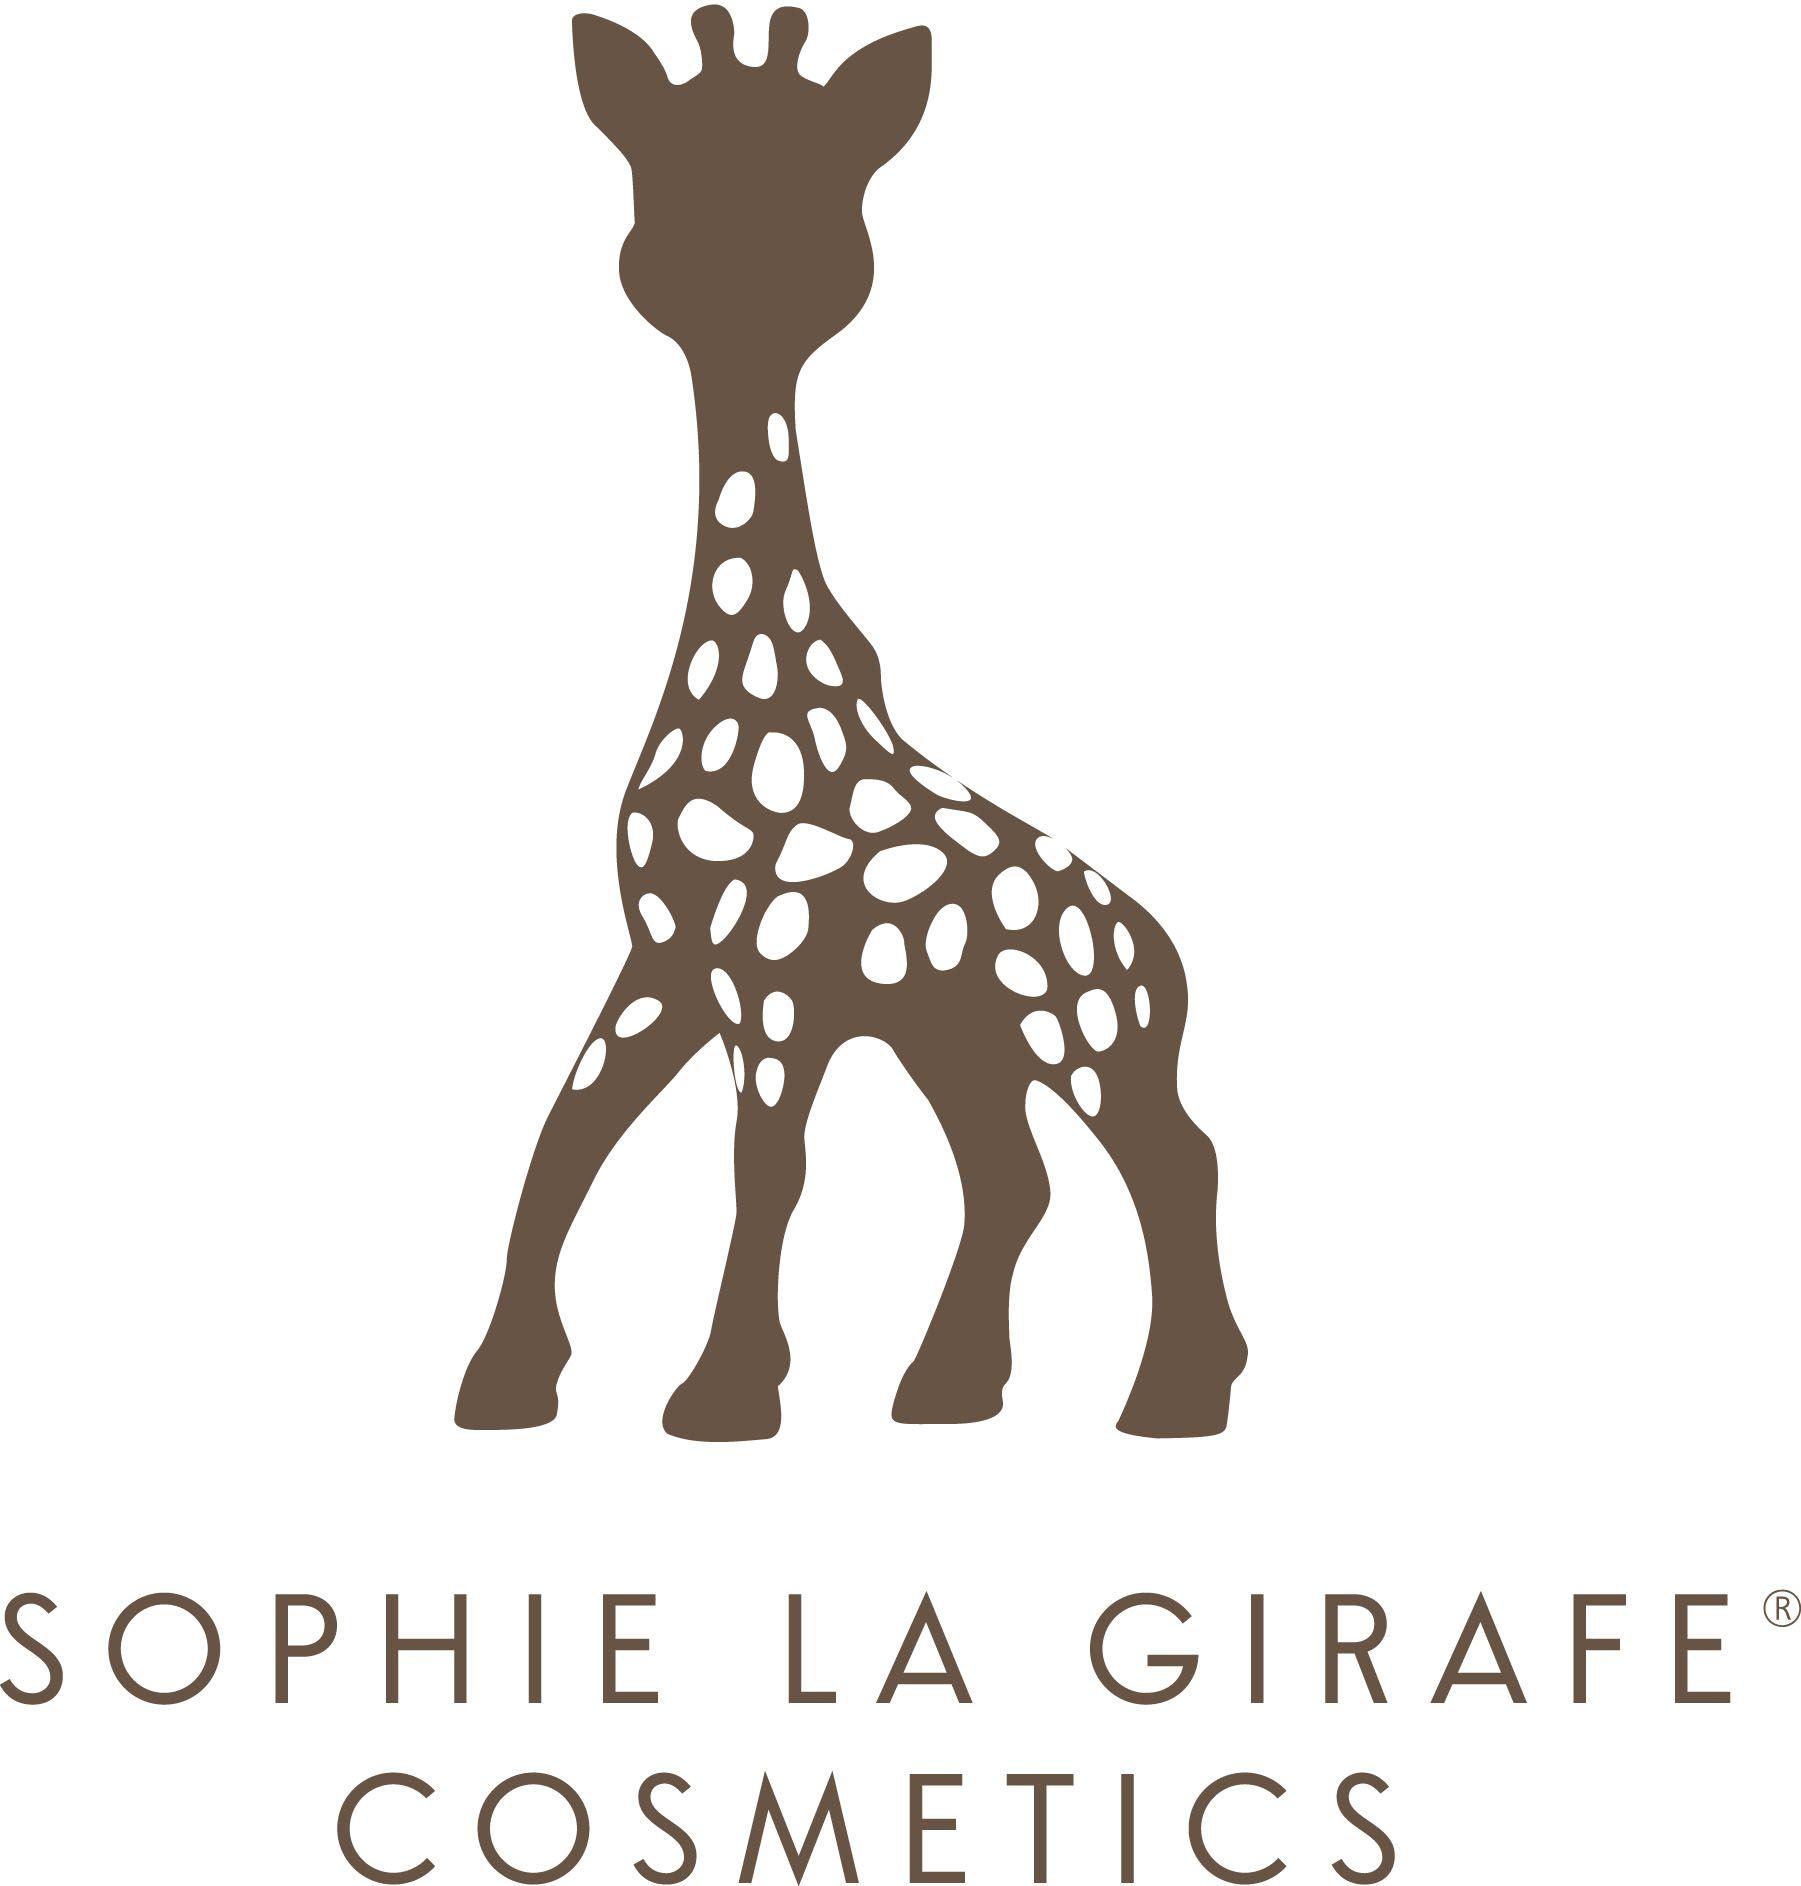 Giraffe Face Logo - ABOUT US. Sophie la girafe Cosmetics